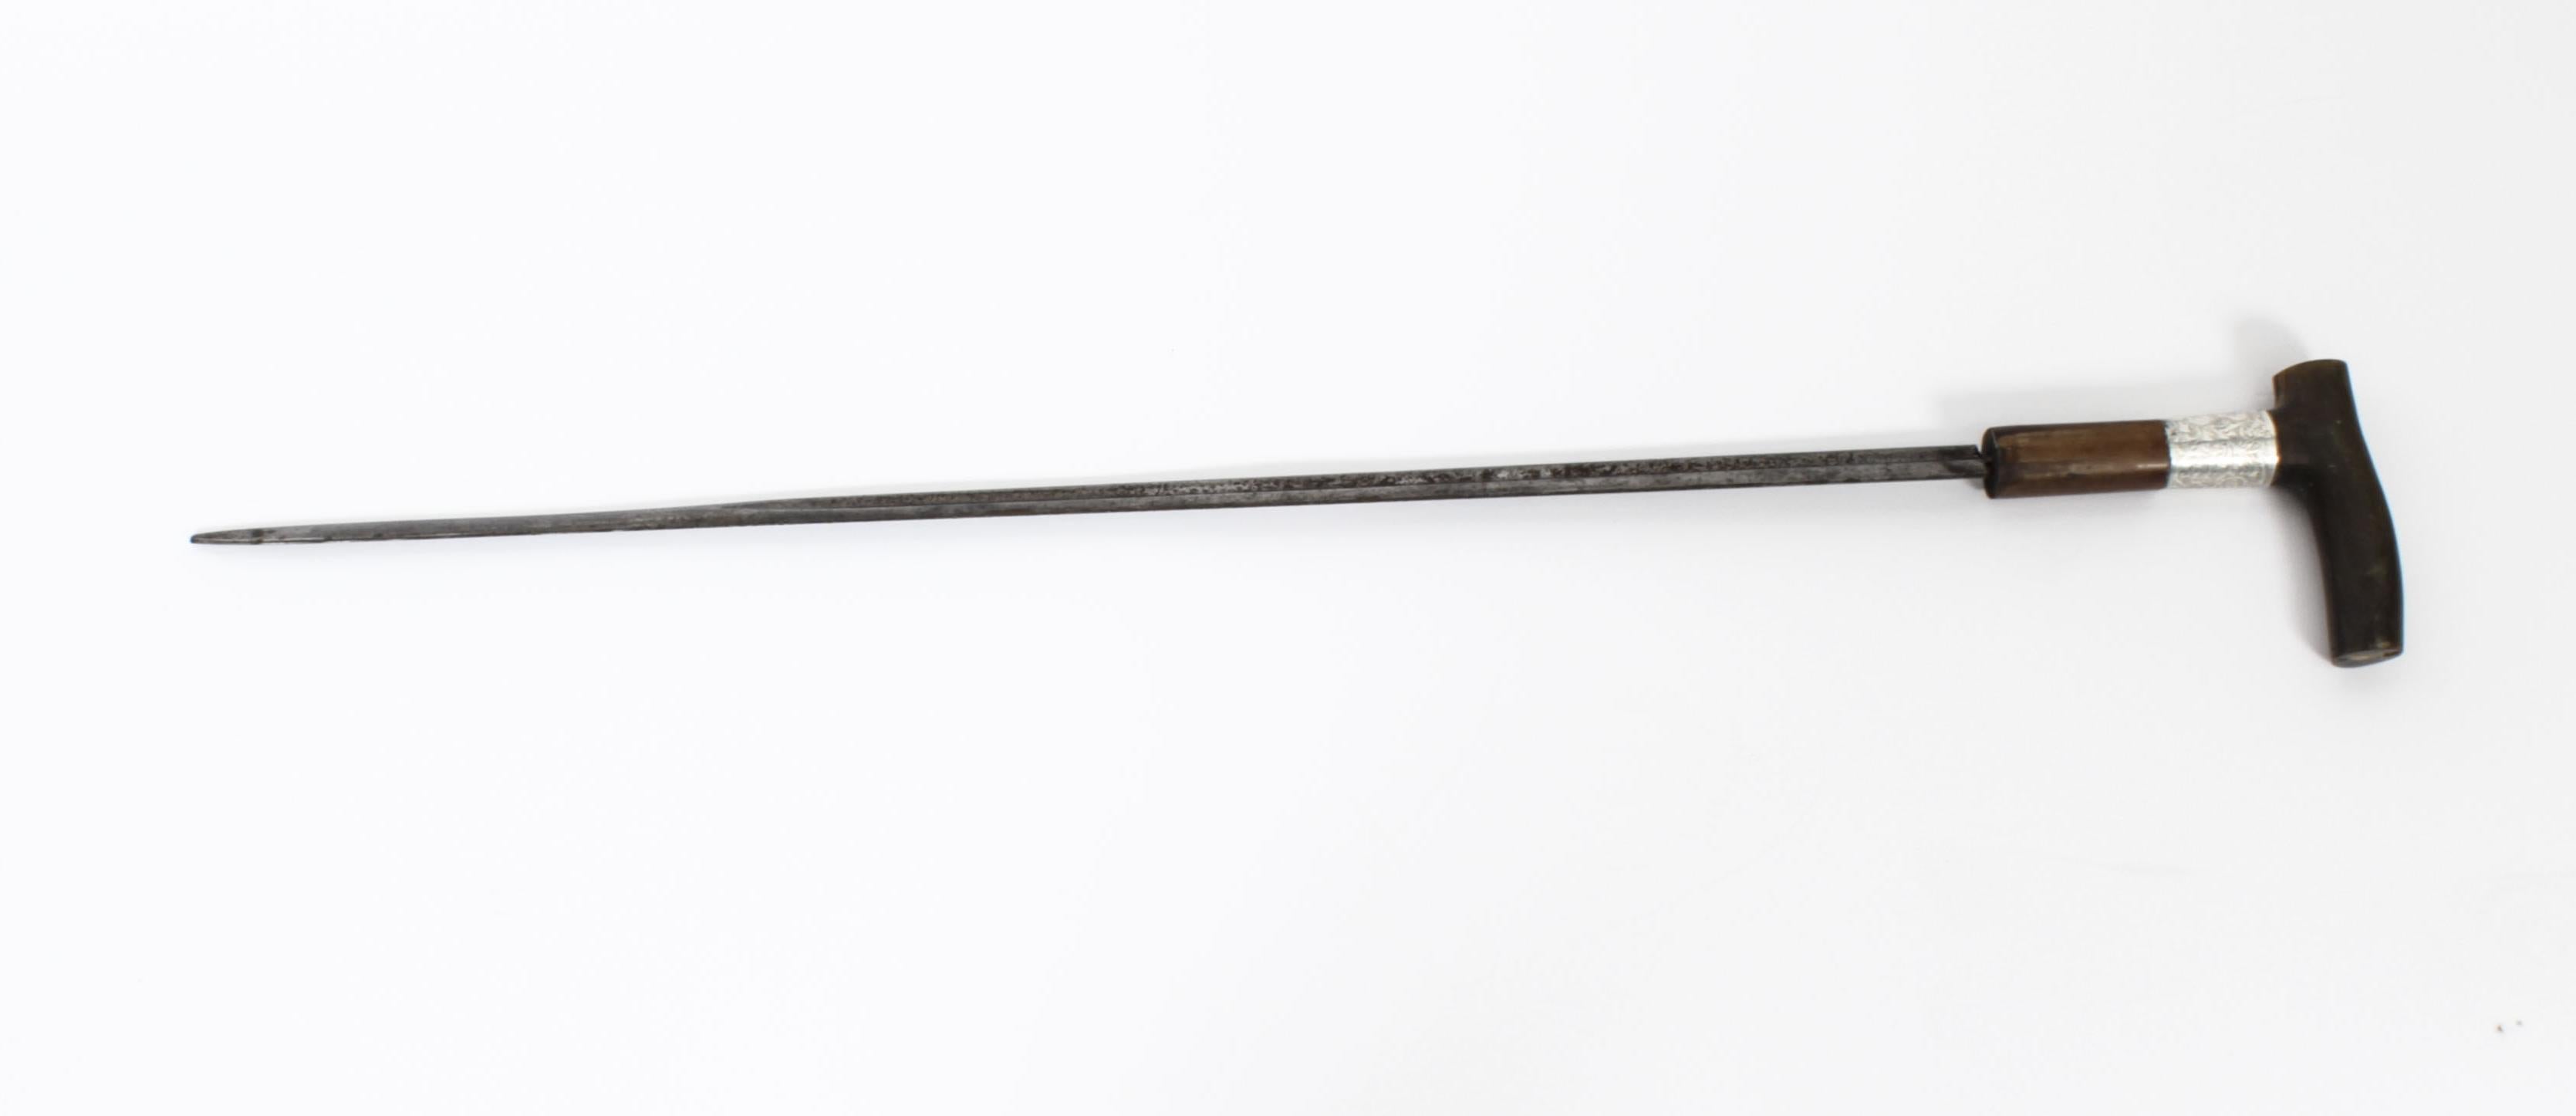 Late 19th Century Antique English Horn & Malacca Sword / Walking Stick Cane 19th Century